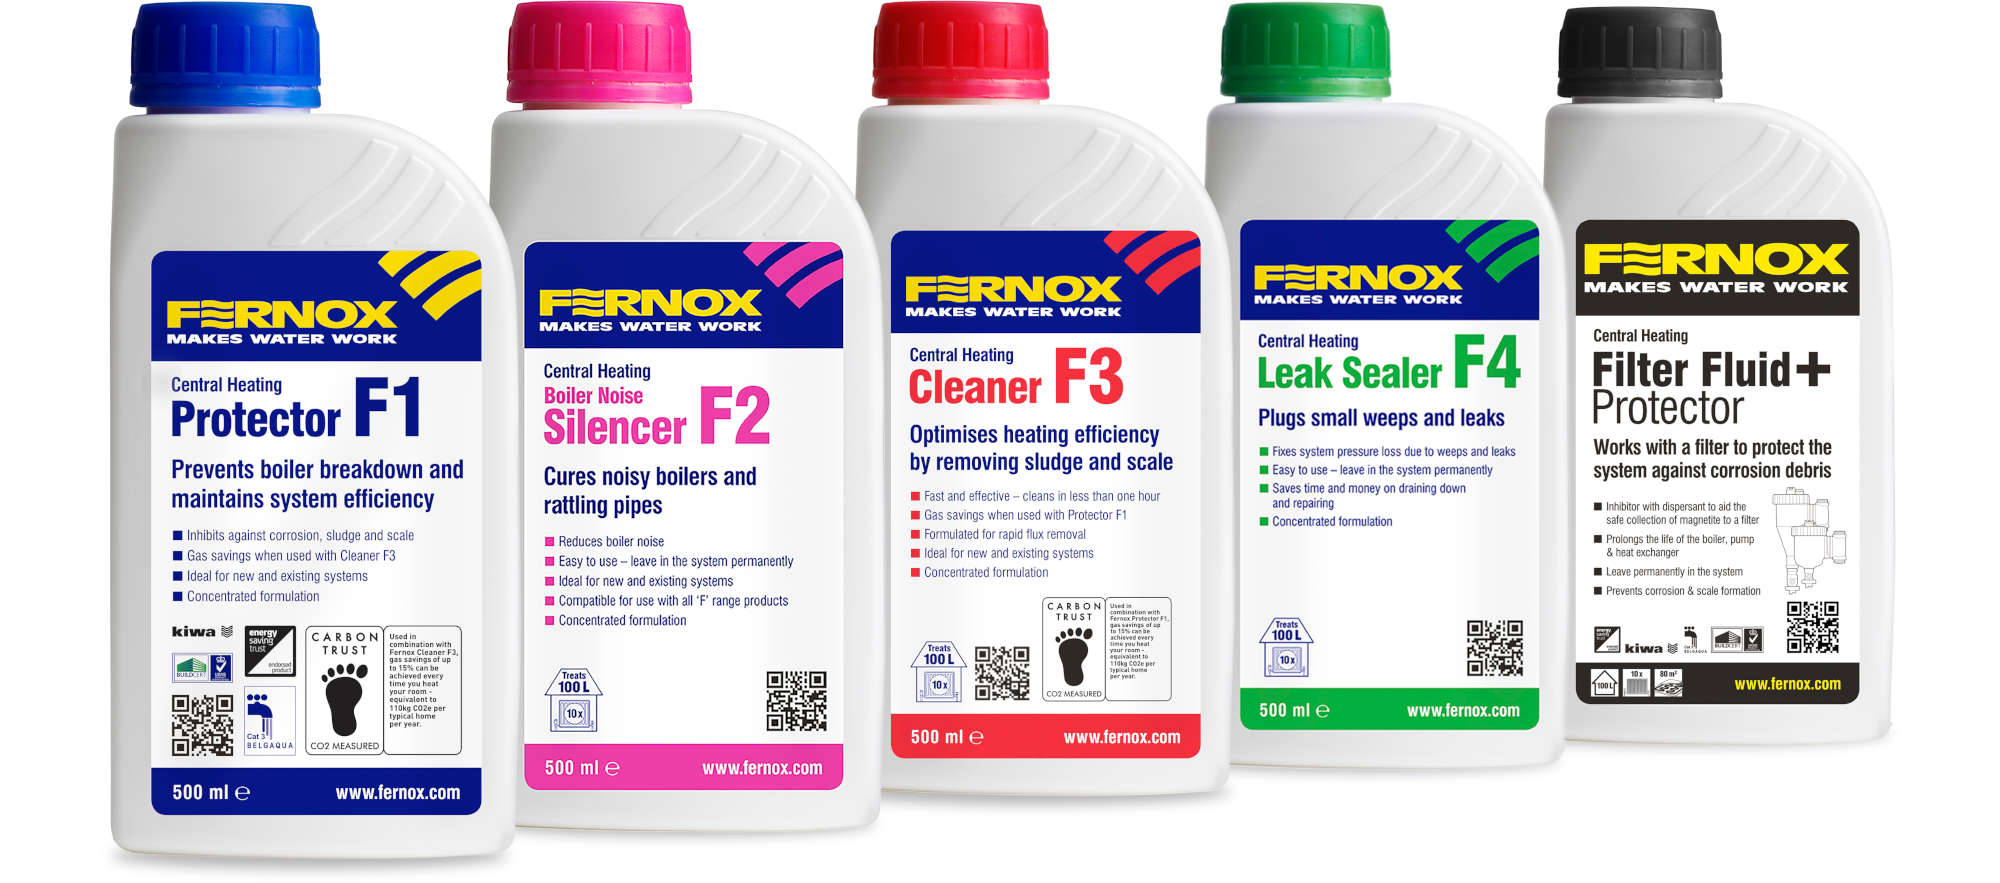 Fernox Product Range